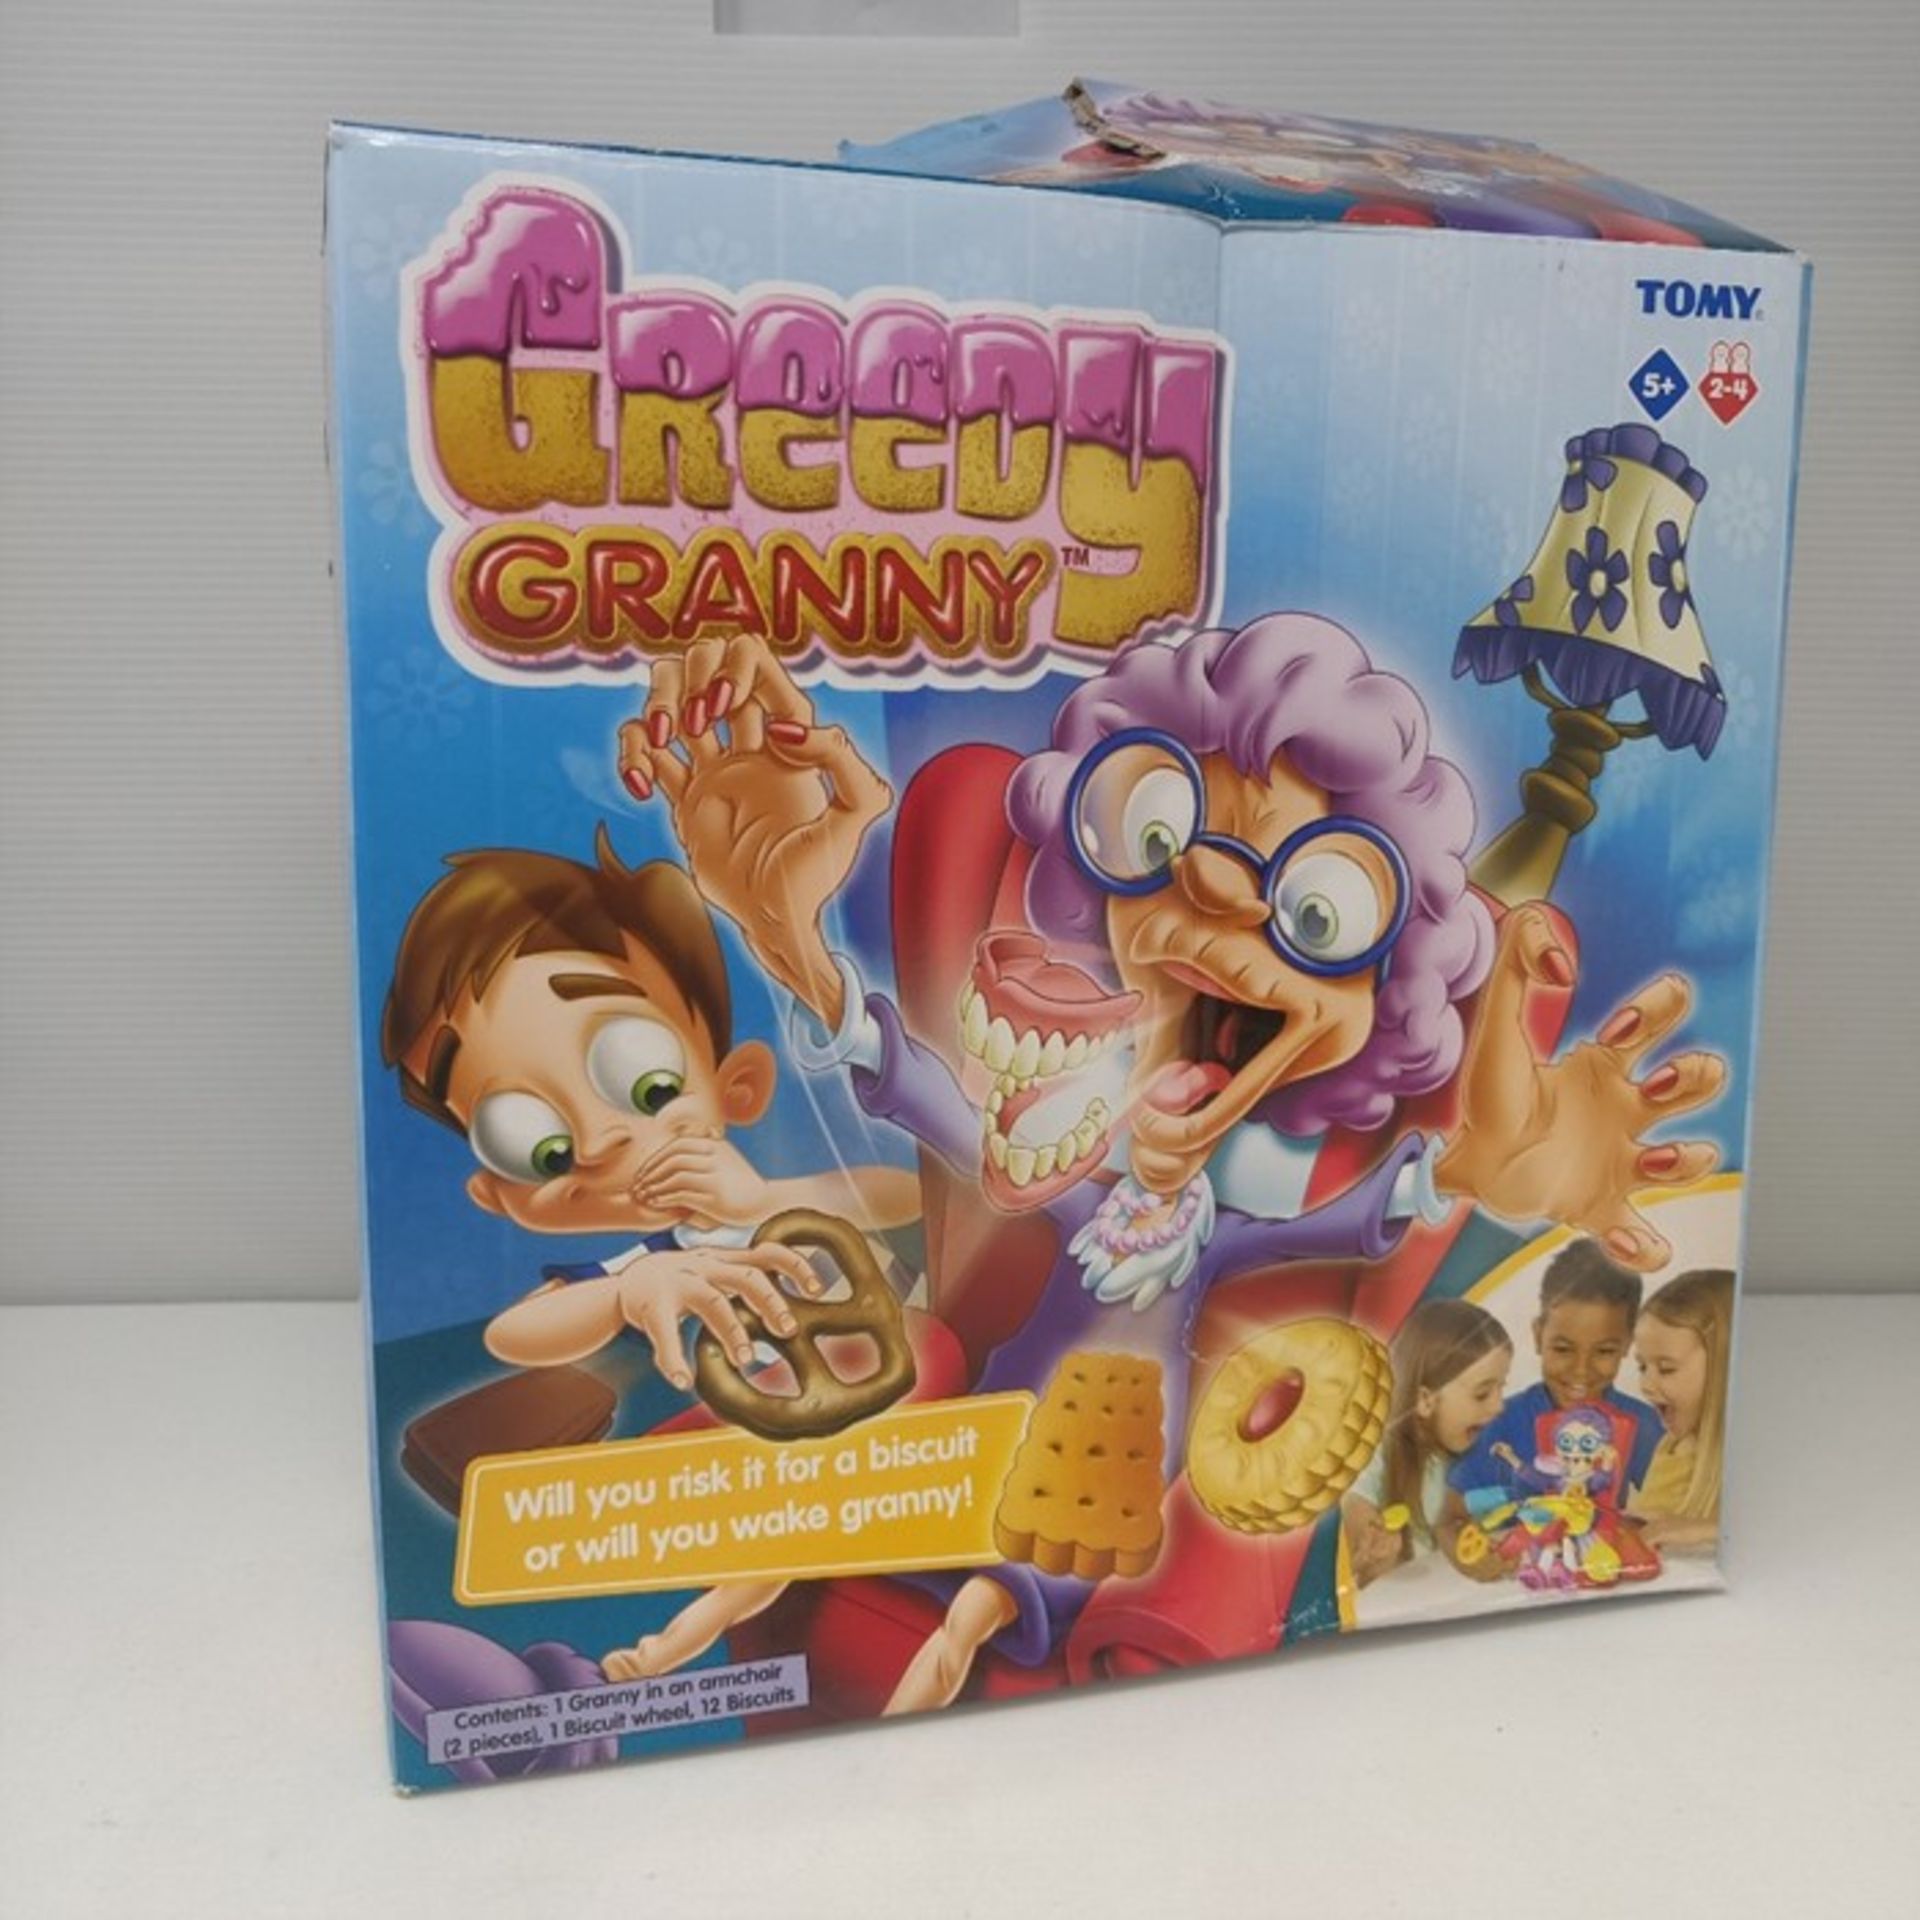 TOMY 13959 Greedy Granny Children's Action Board Game, Family & Preschool Kids Prescho - Image 2 of 2